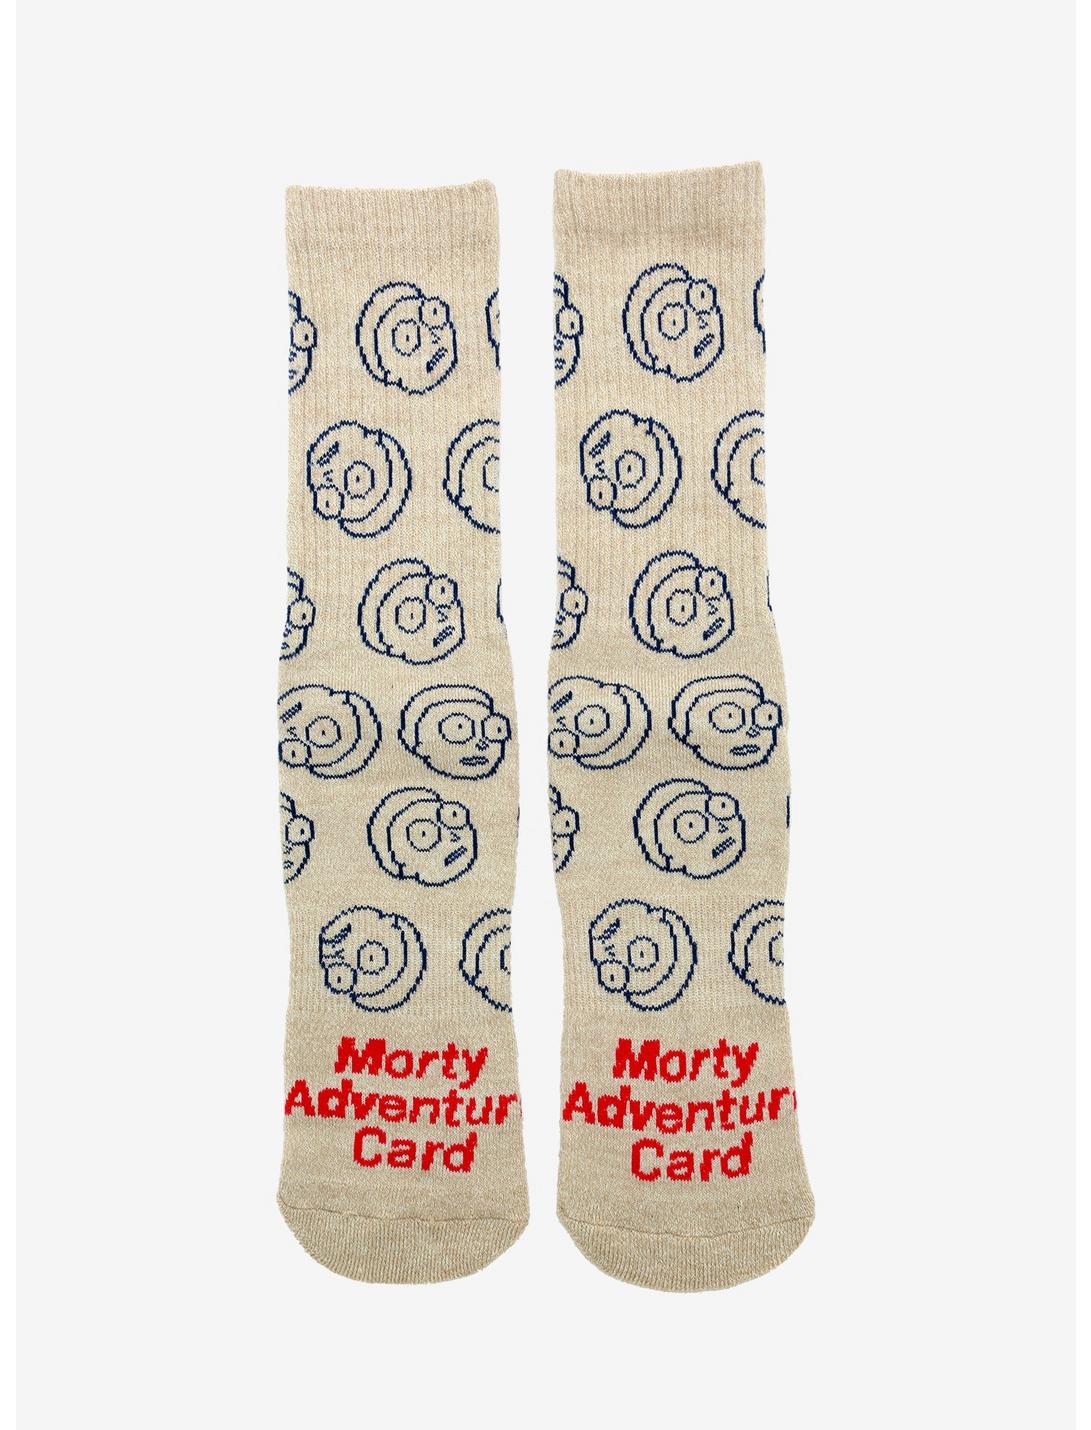 Rick and Morty Morty Adventure Card Crew Socks, , hi-res